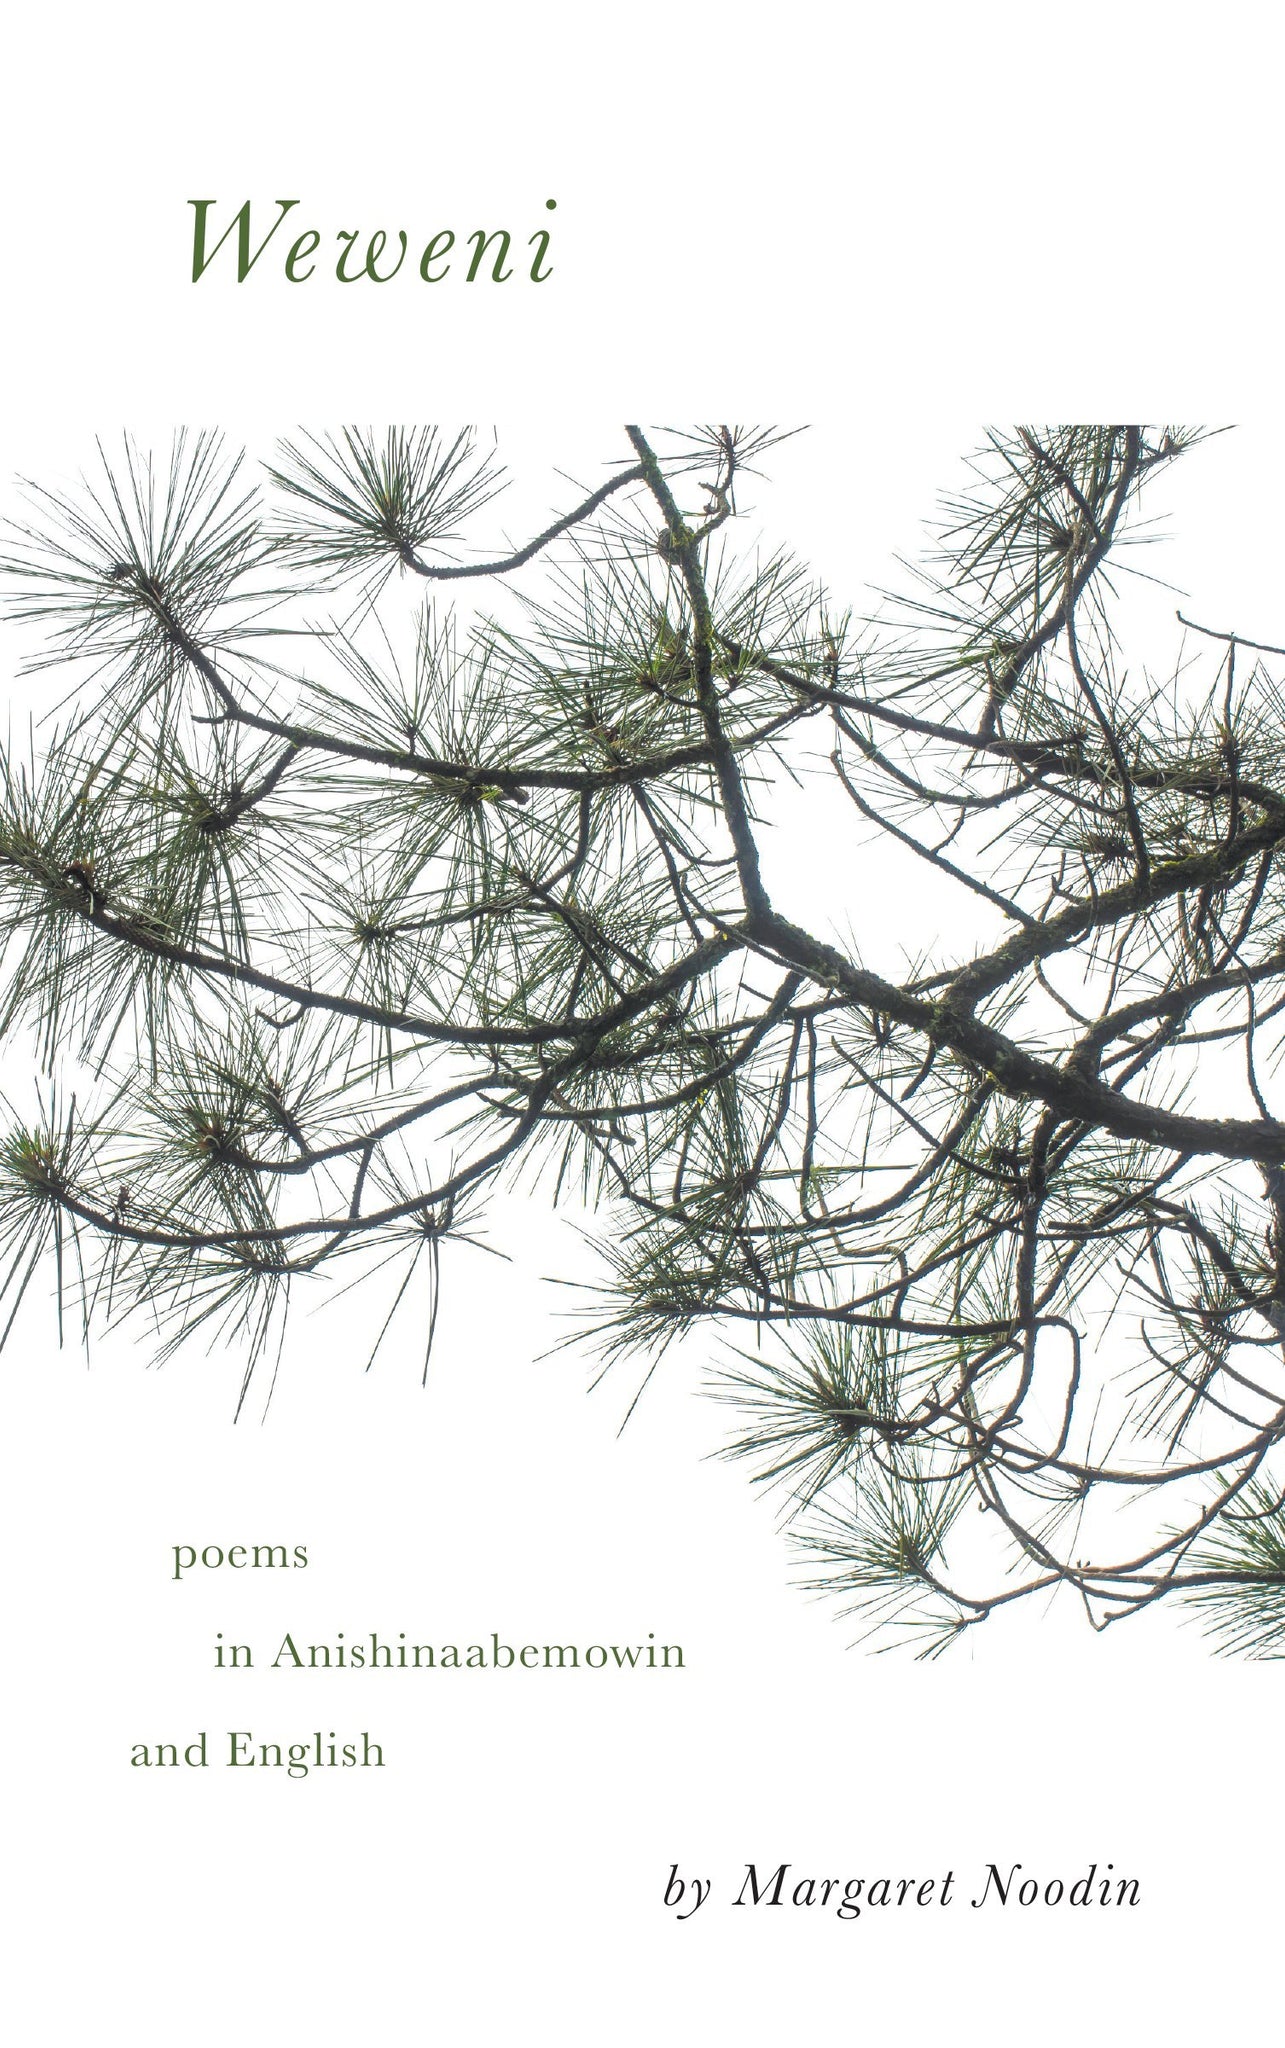 Weweni: Poems in Anishinaabemowin and English